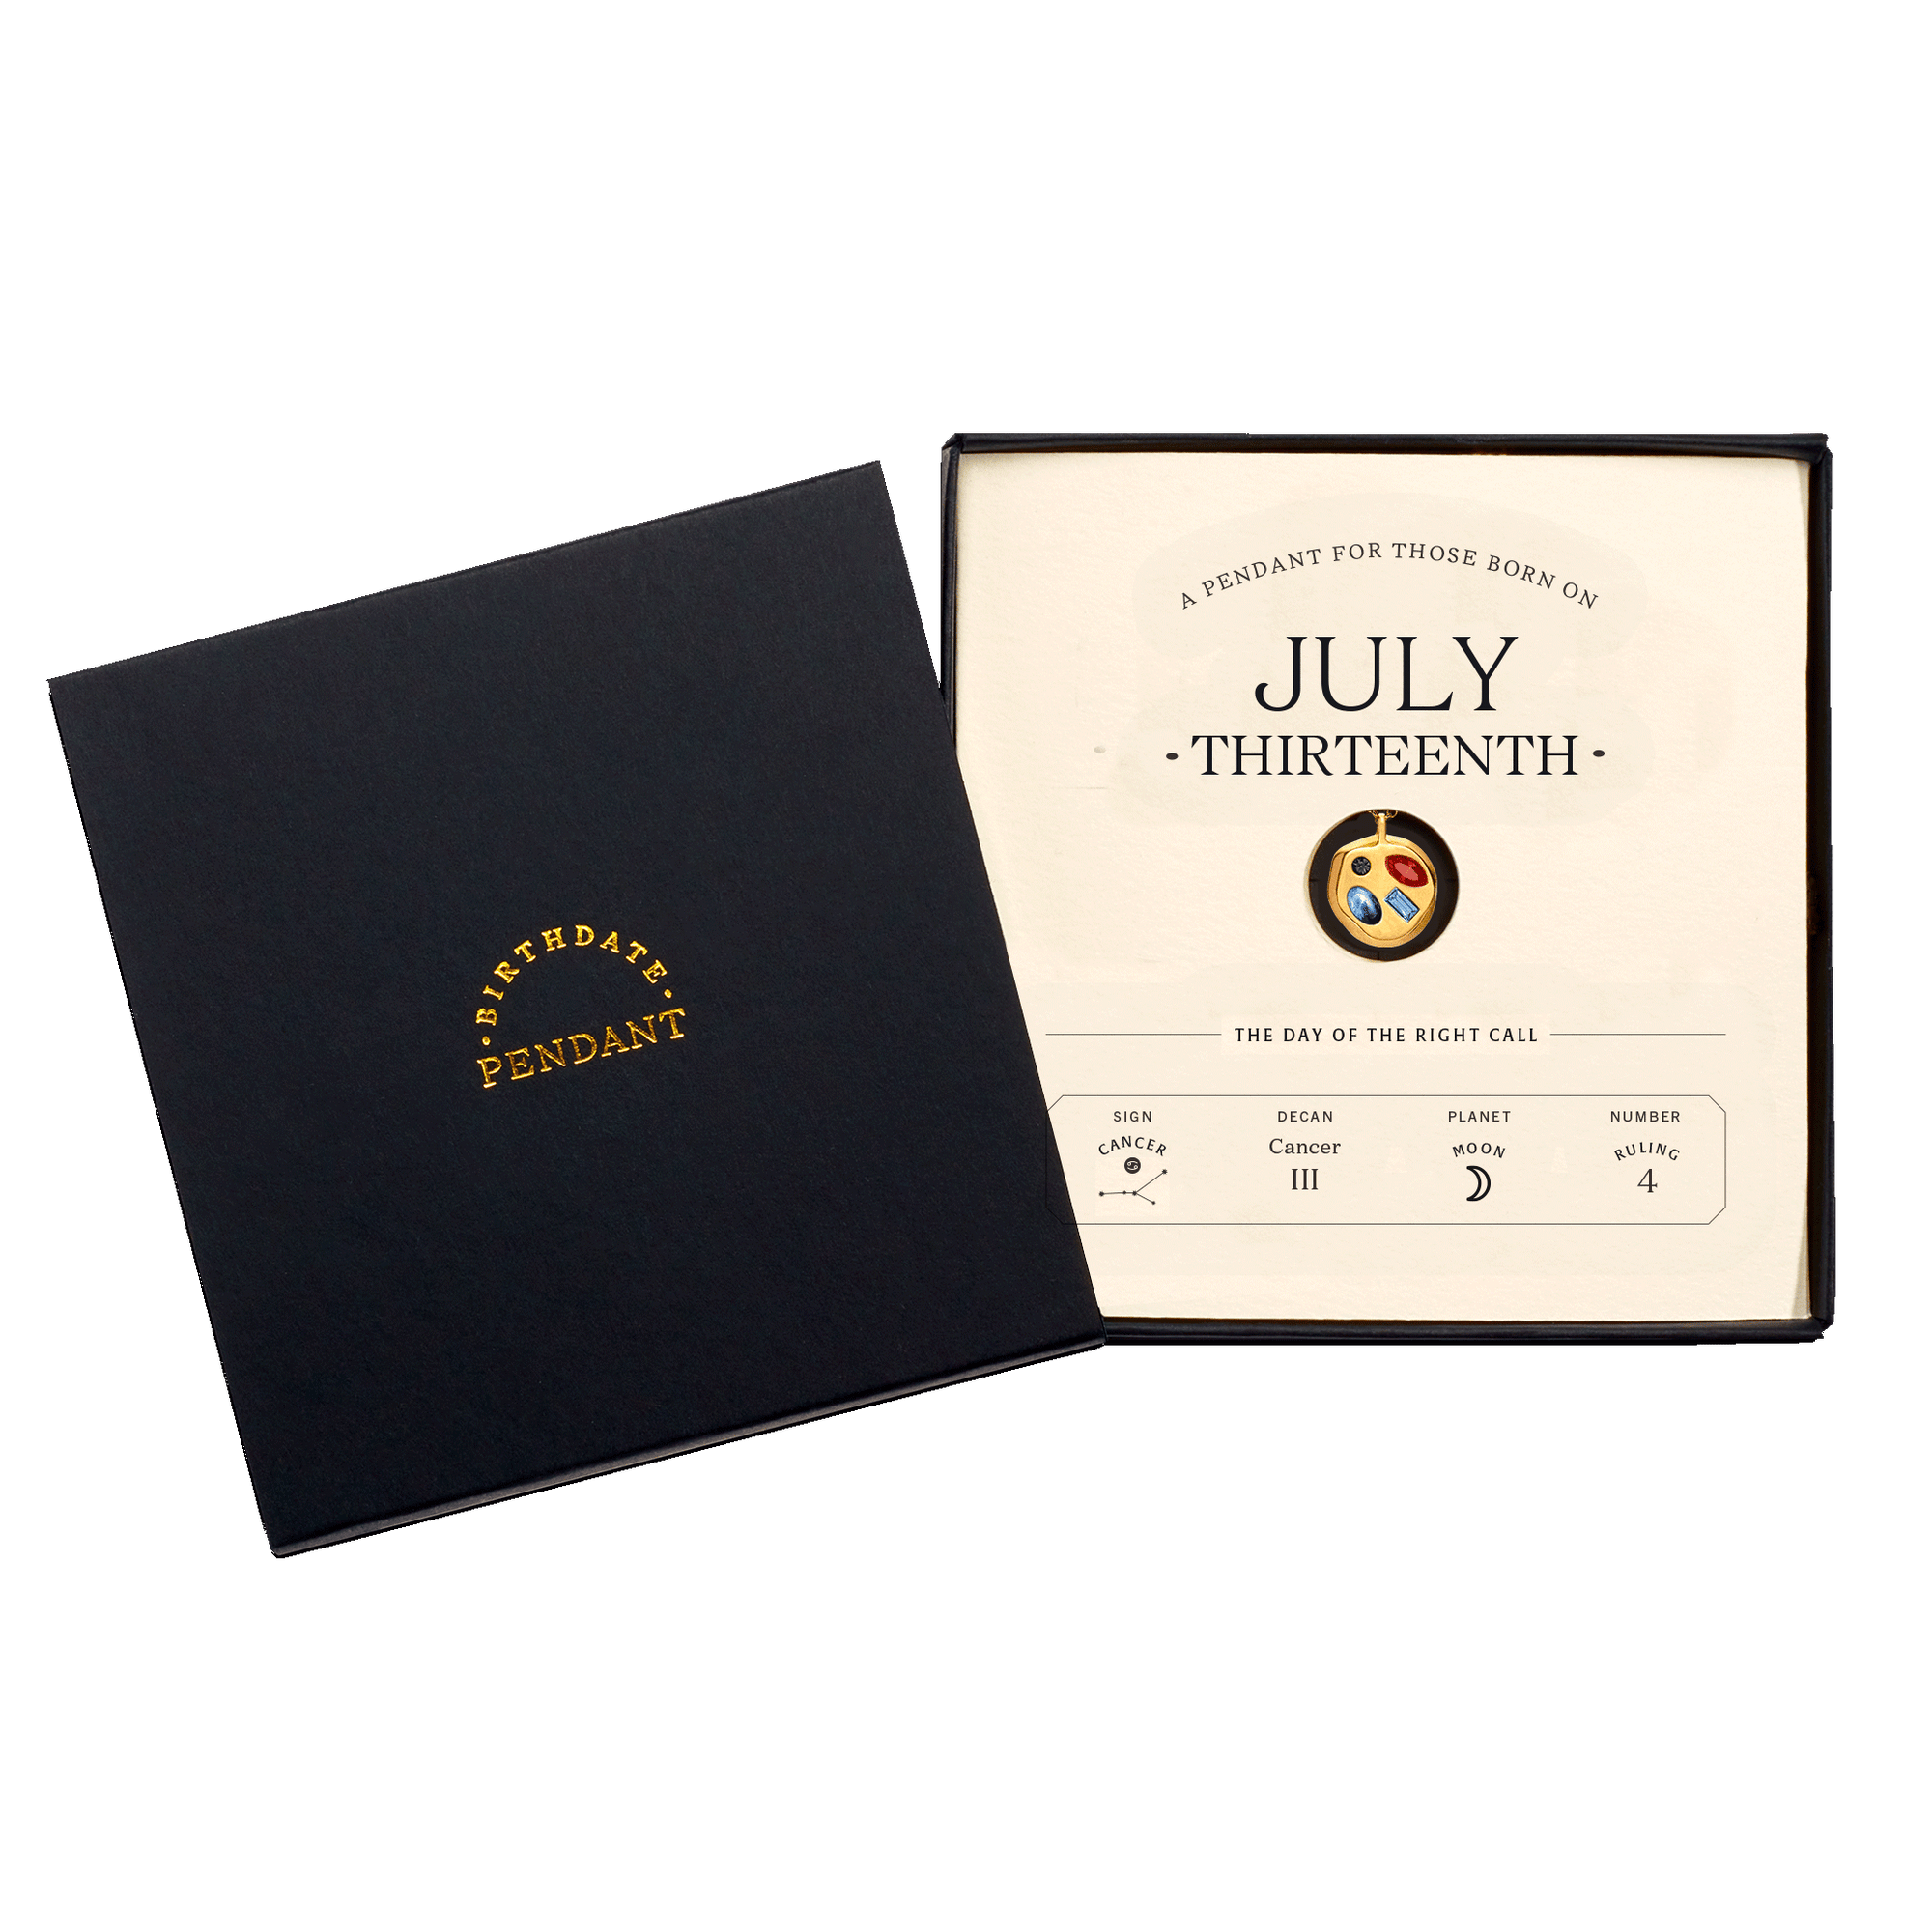 The July Thirteenth Pendant inside its box